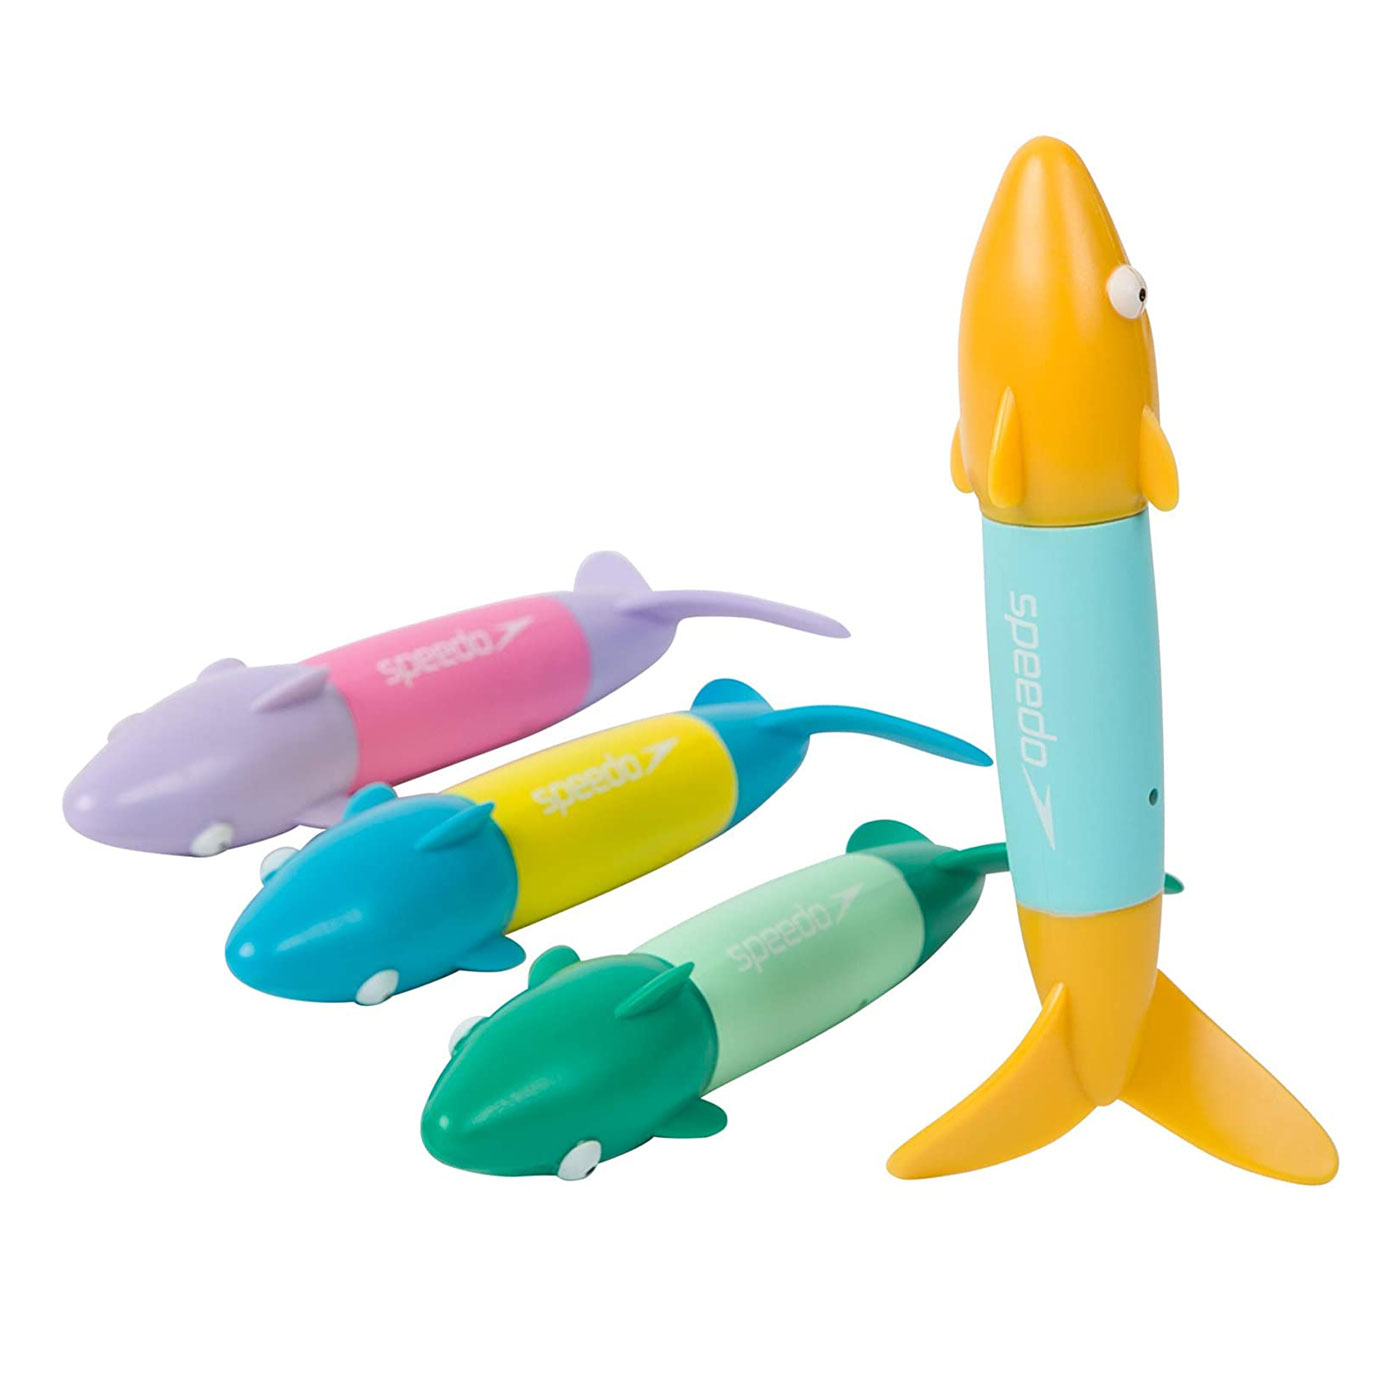 SPEEDO 水中造型玩具組 SD808384D703 - 藍粉綠黃